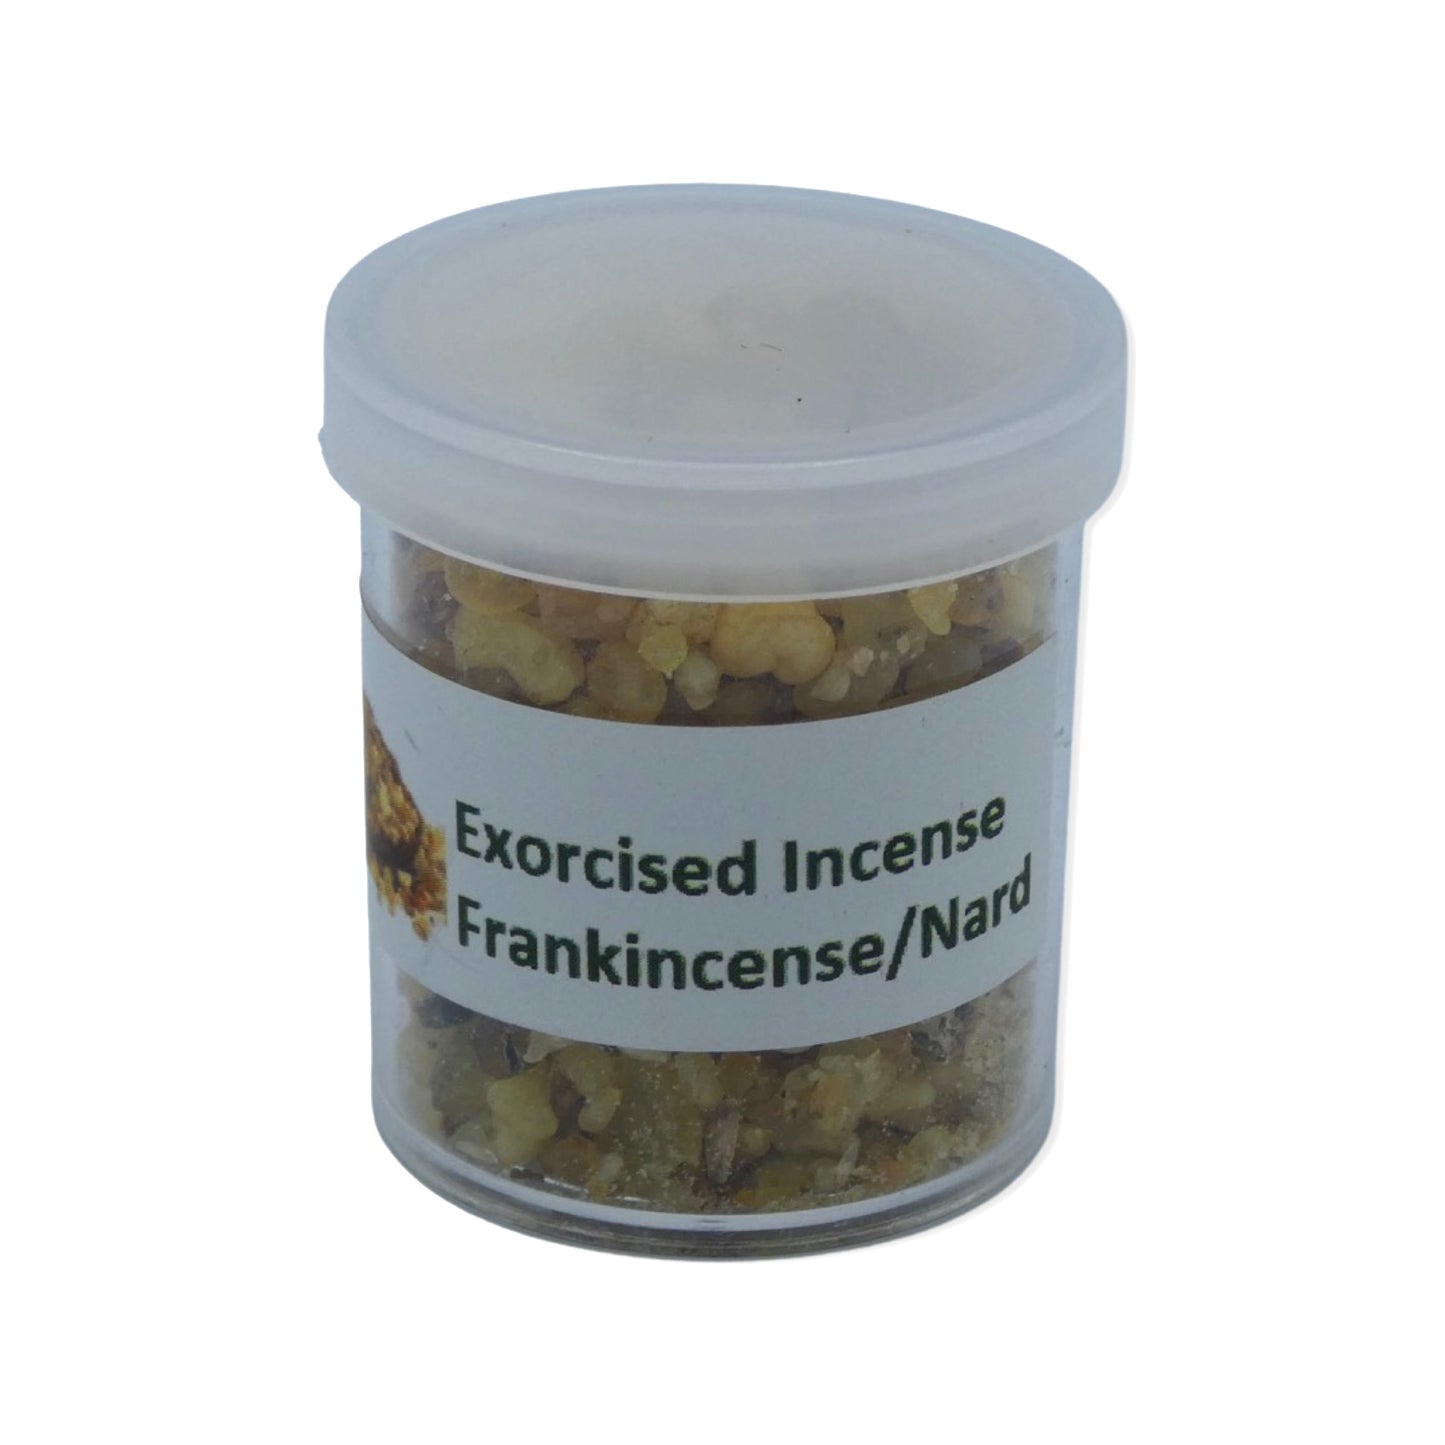 Exorcised Incense - Frankincense Nard